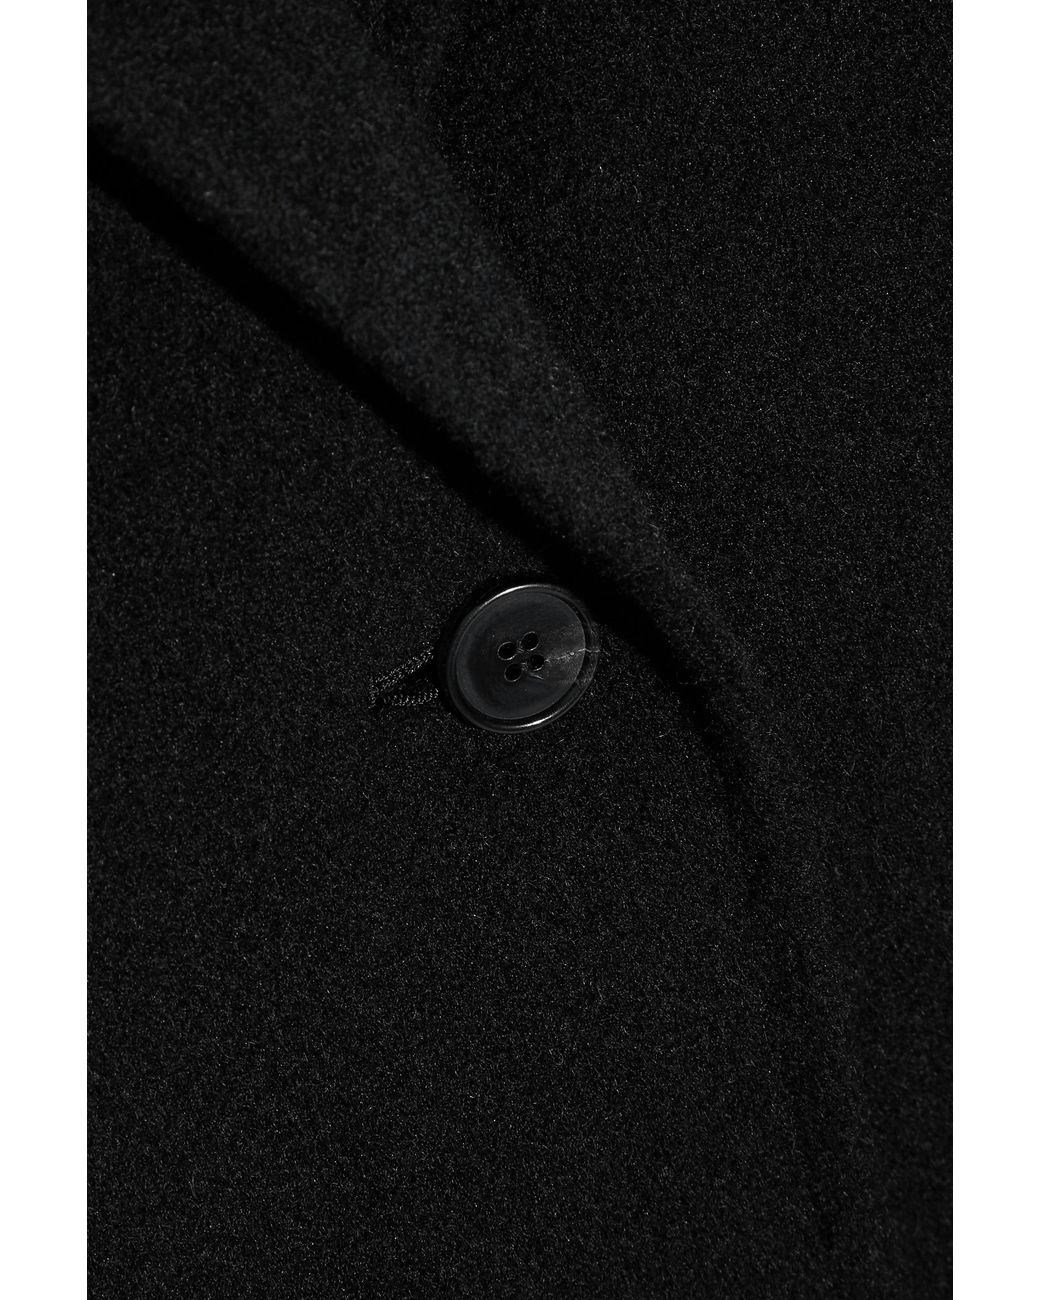 Cashmere coat Donna Karan Black size 6 US in Cashmere - 24229976